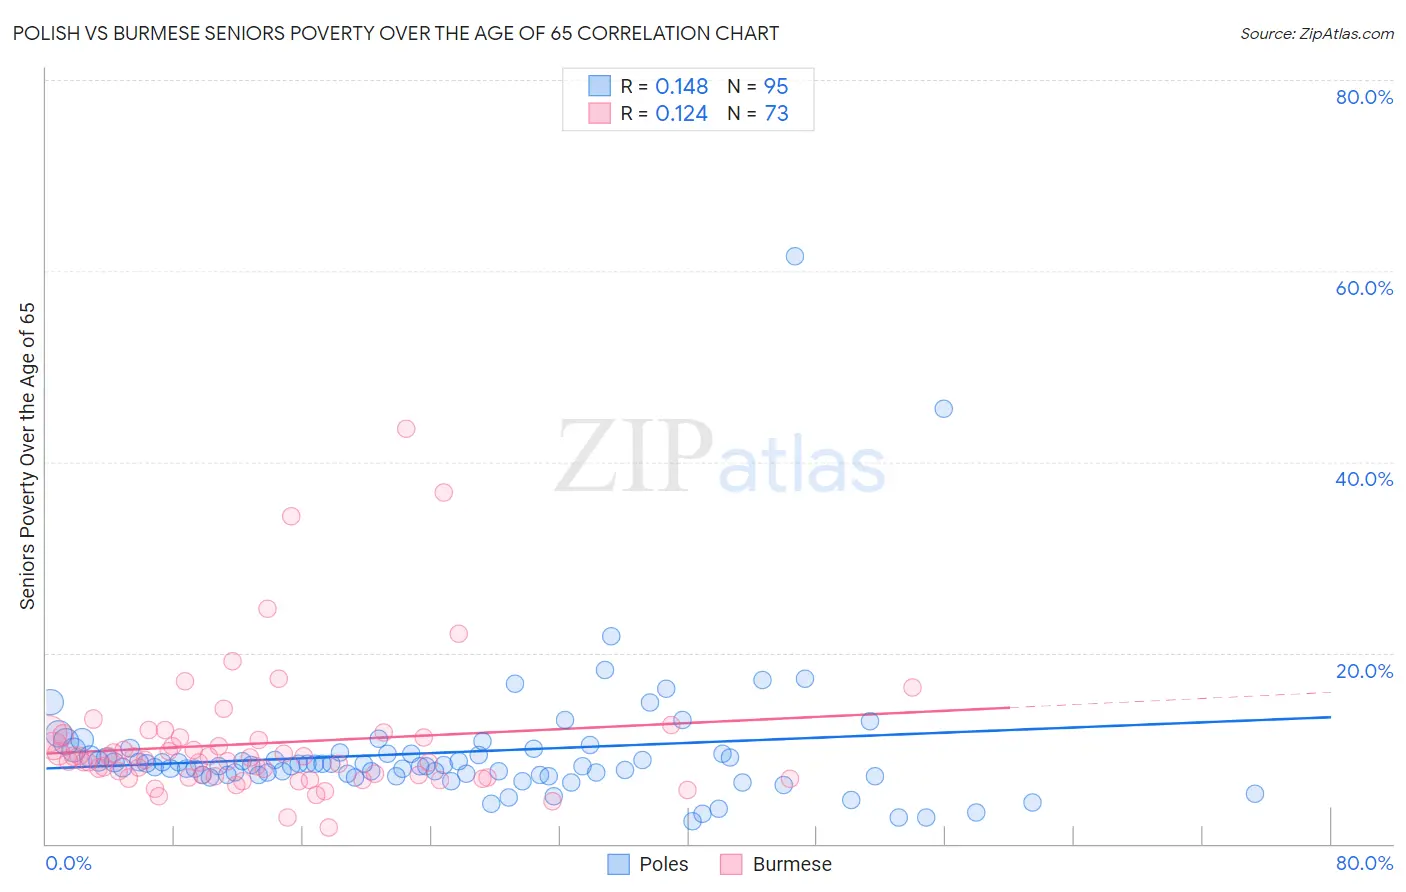 Polish vs Burmese Seniors Poverty Over the Age of 65